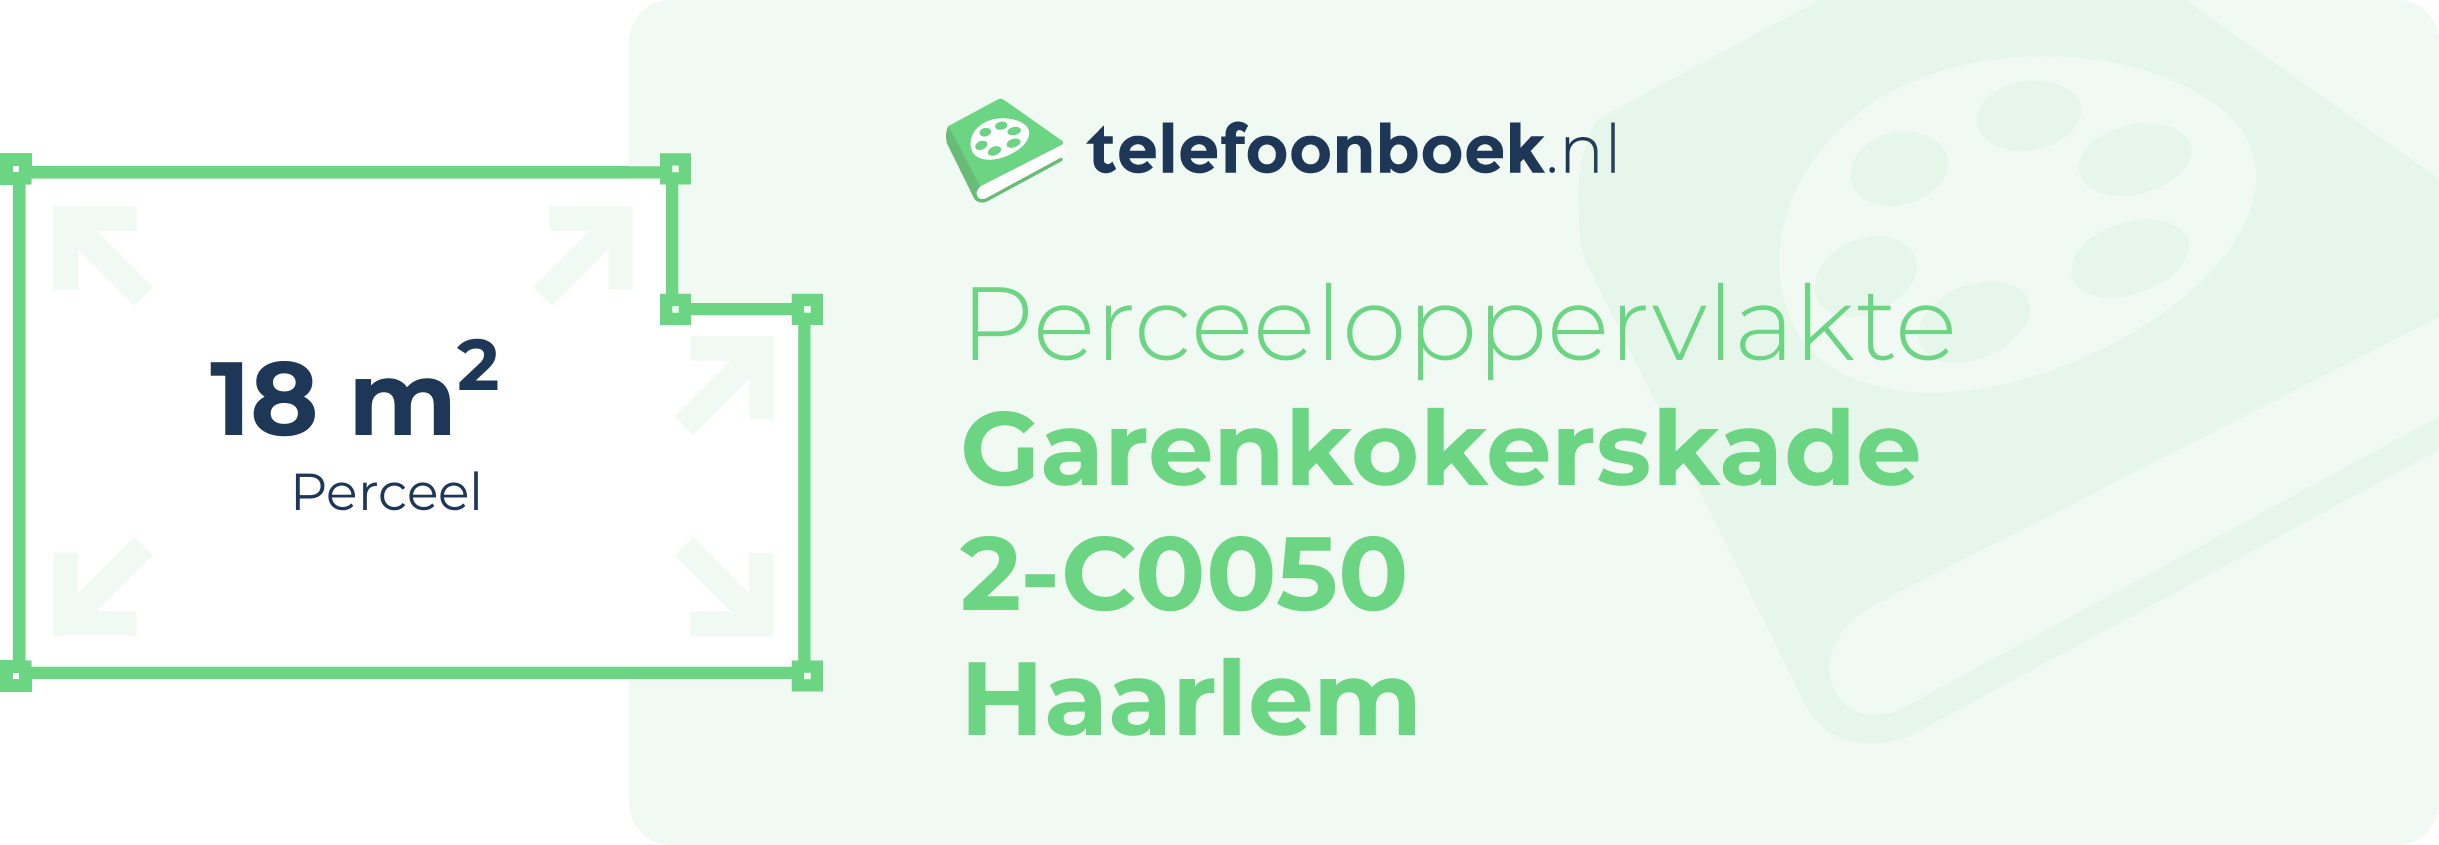 Perceeloppervlakte Garenkokerskade 2-C0050 Haarlem